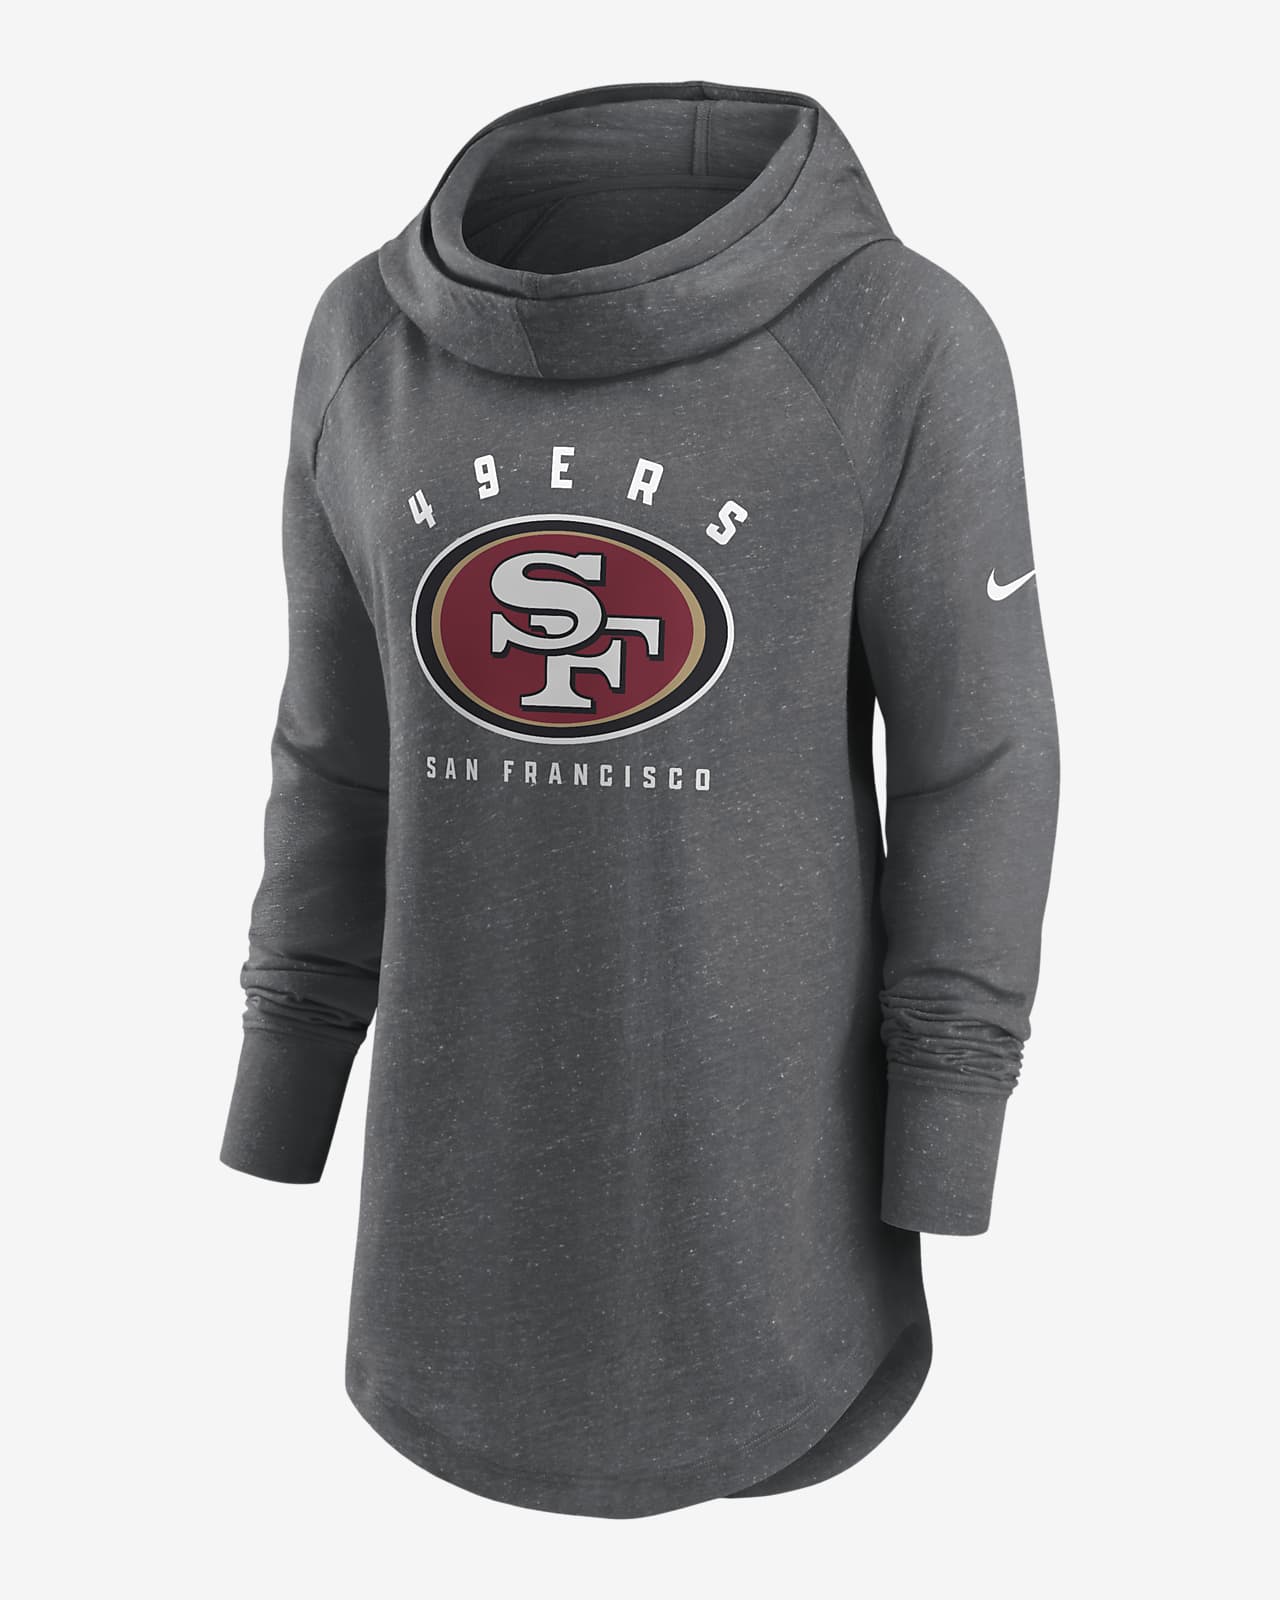 Women's Nike Heather Charcoal San Francisco 49ers Raglan Funnel Neck Pullover Hoodie Size: Medium